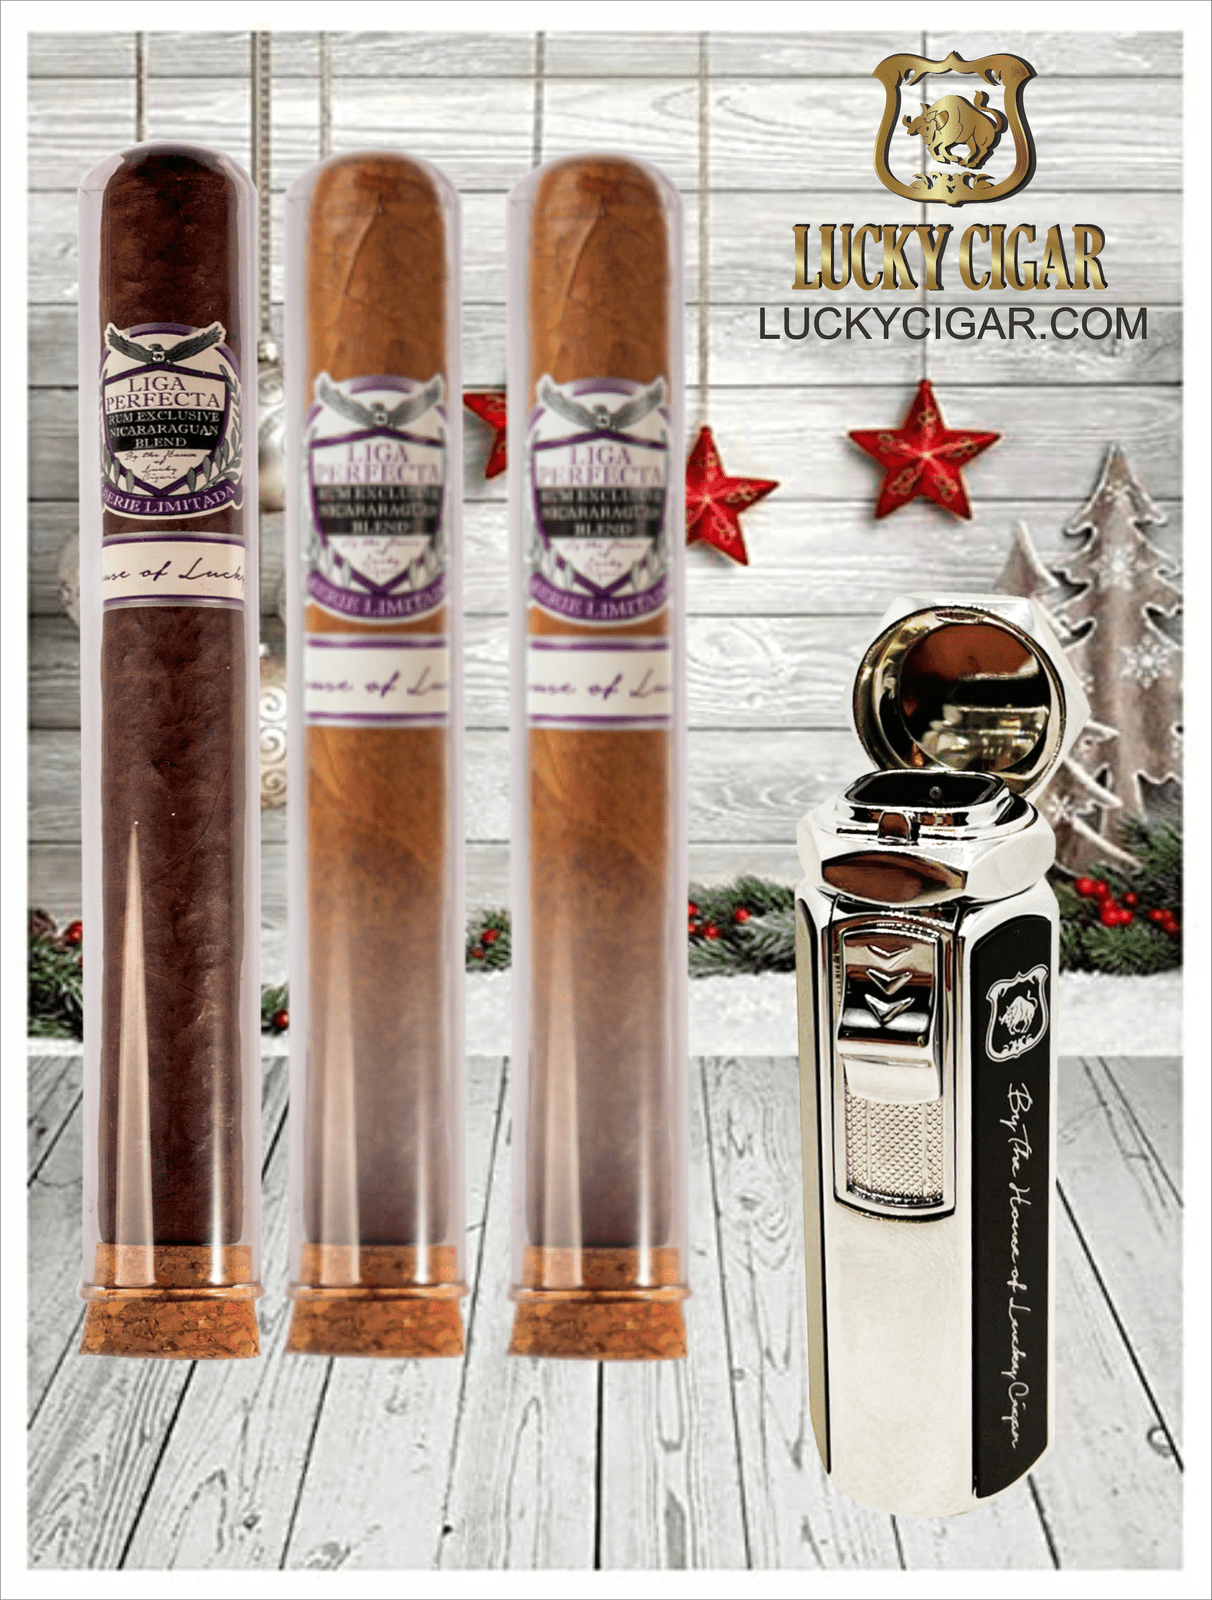 Cigar Gift Sets: Set of 3 Cigars, 3 Liga Perfecta Cigars with Torch